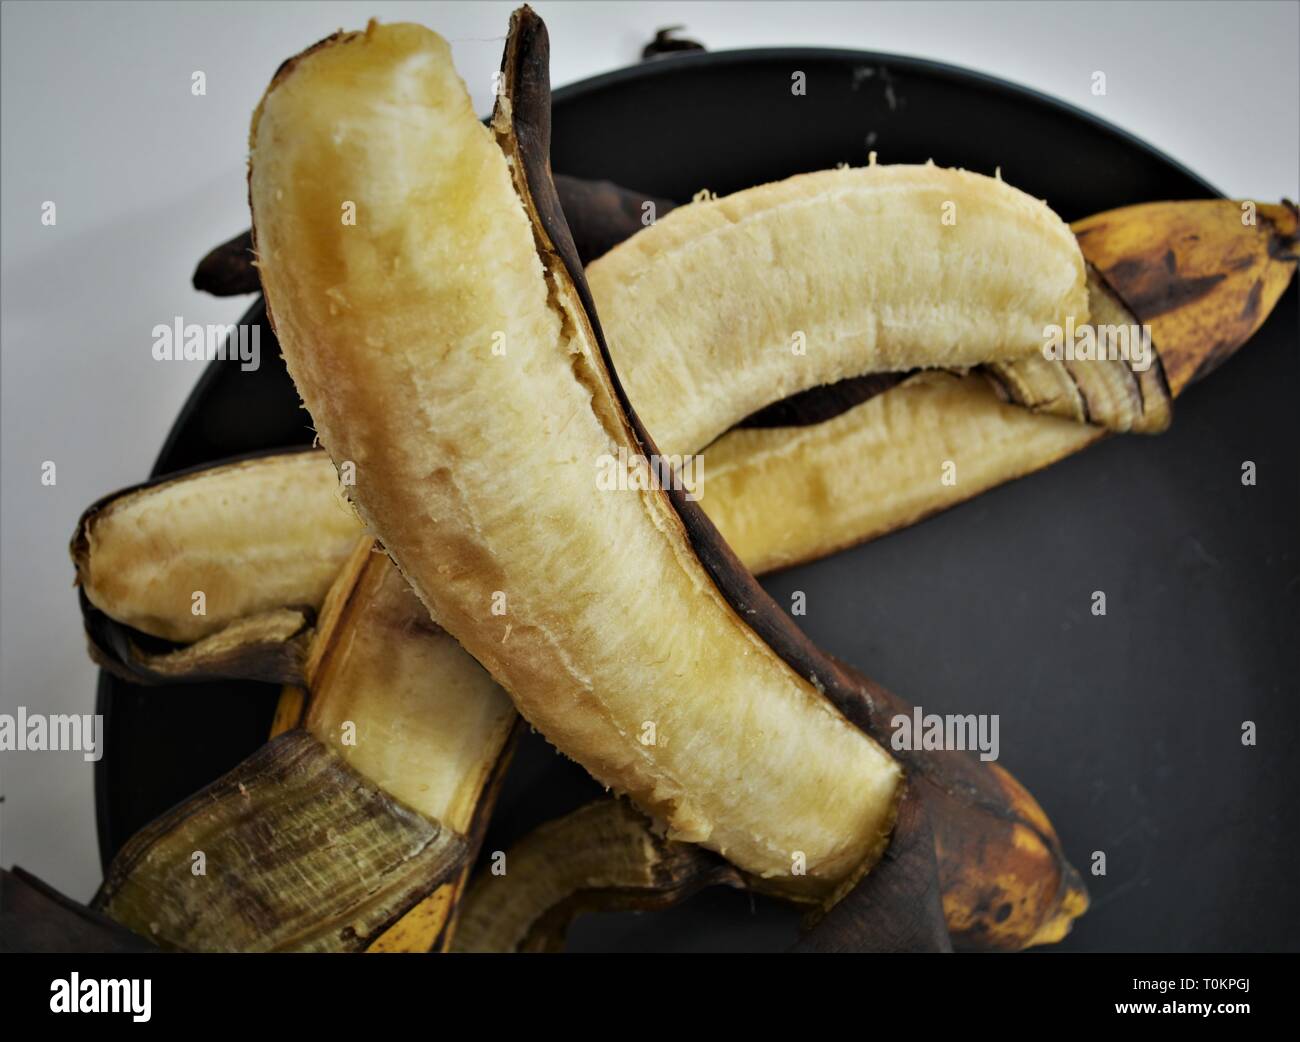 3 over ripe bananas on black plate Stock Photo - Alamy